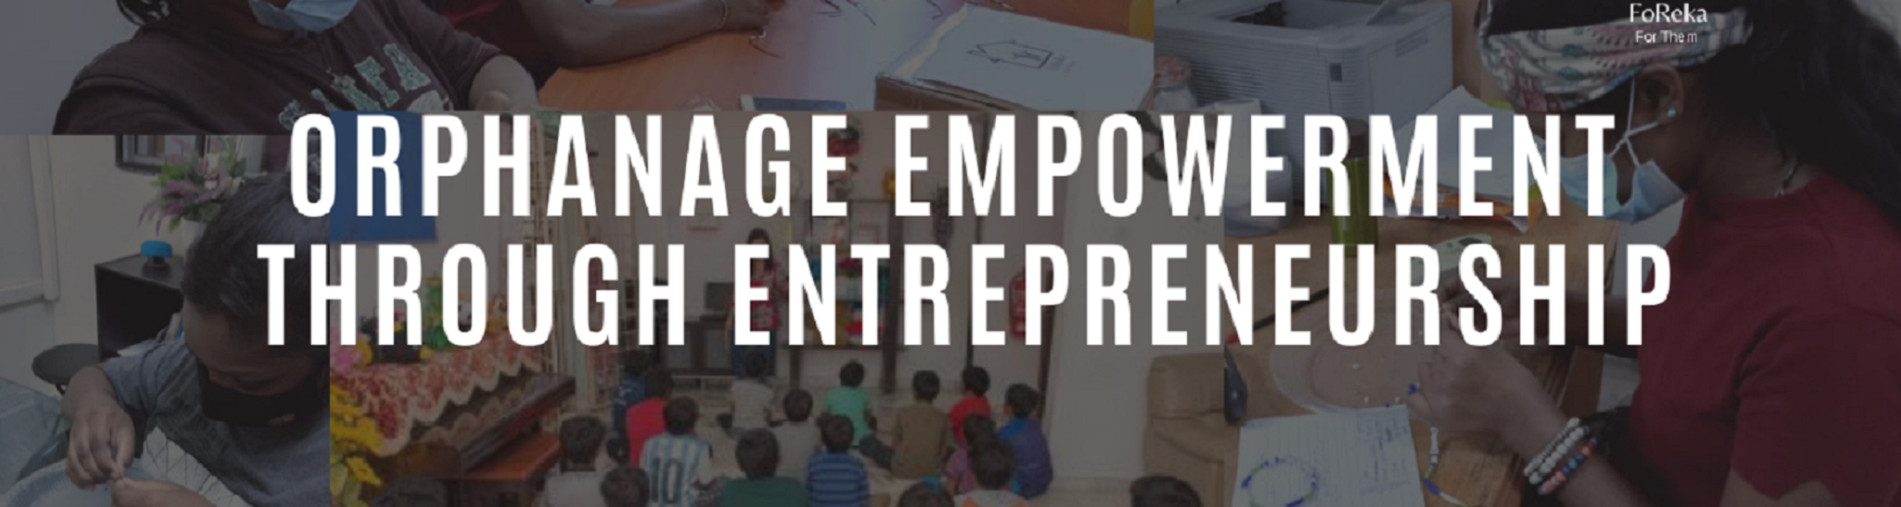 Orphanage Empowerment through Entrepreneurship Activities 